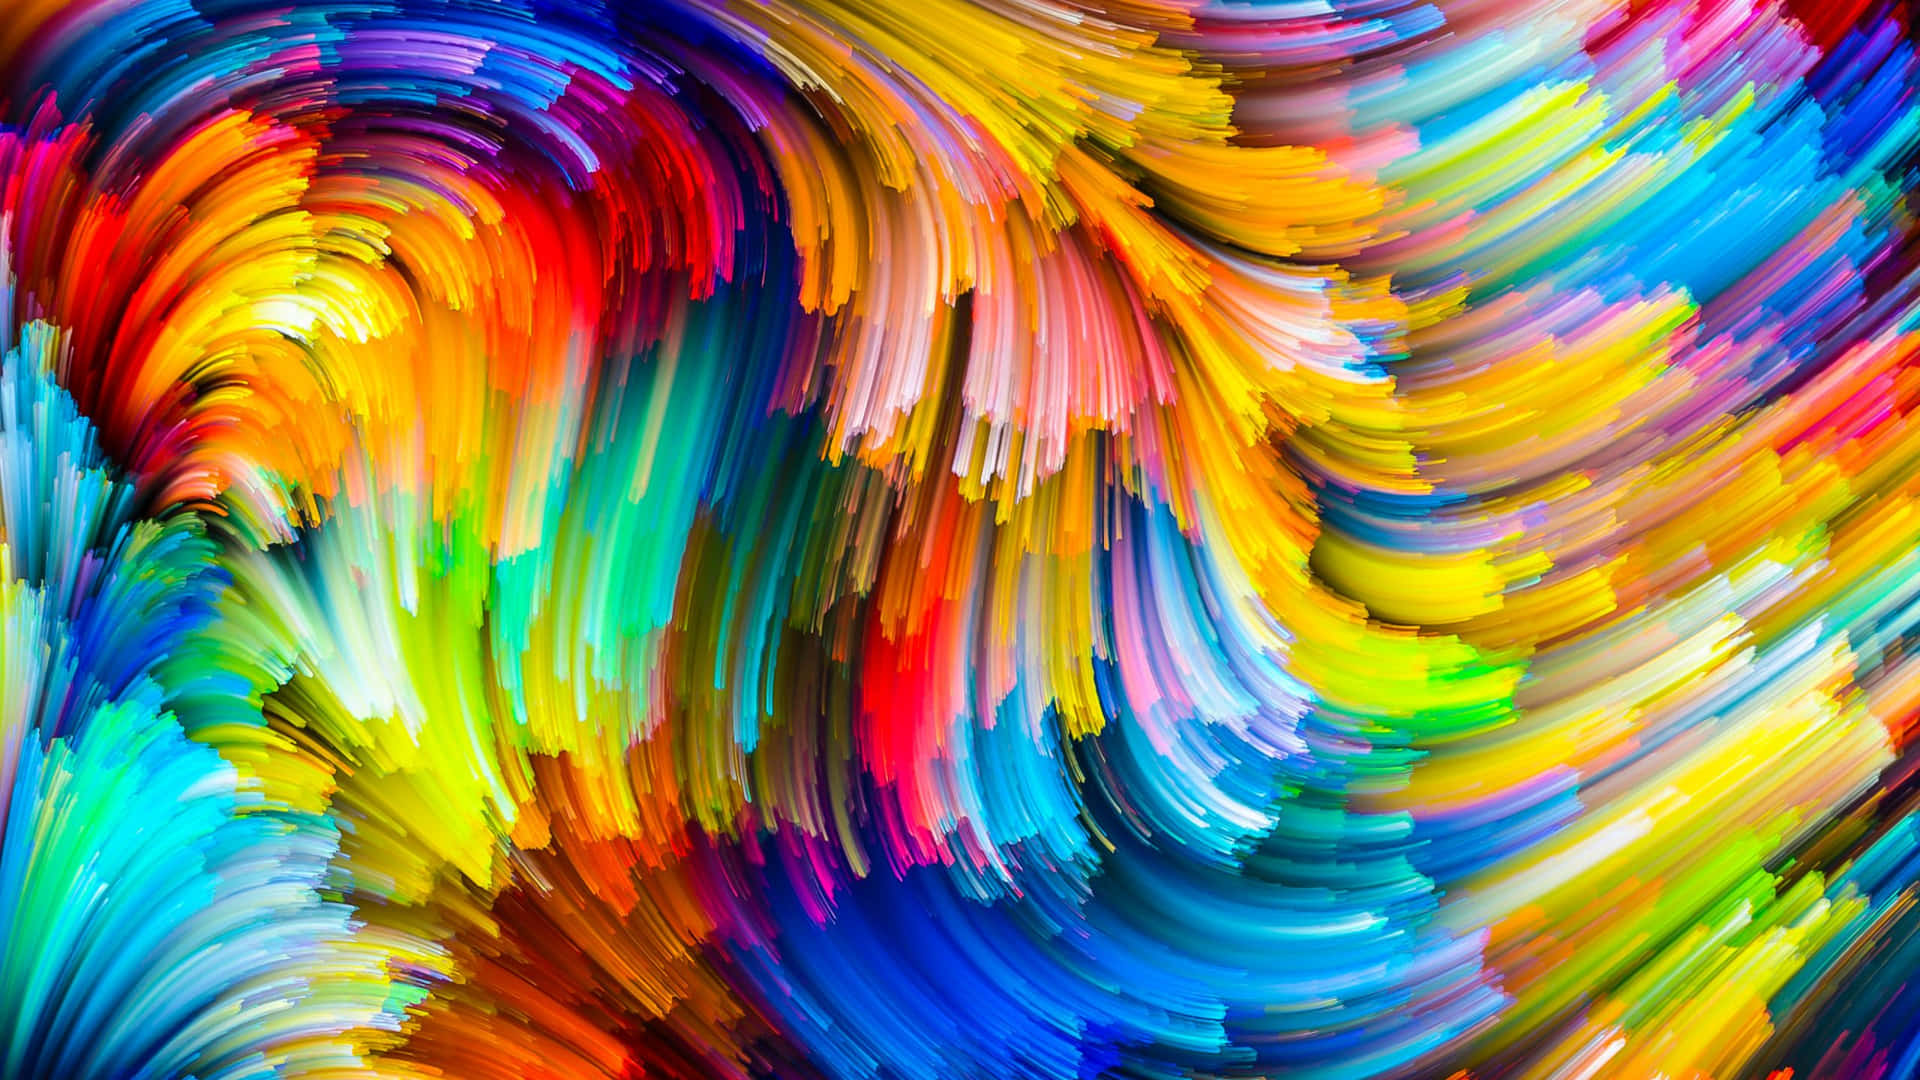 Assortment of colored shapes on a vibrant desktop Wallpaper